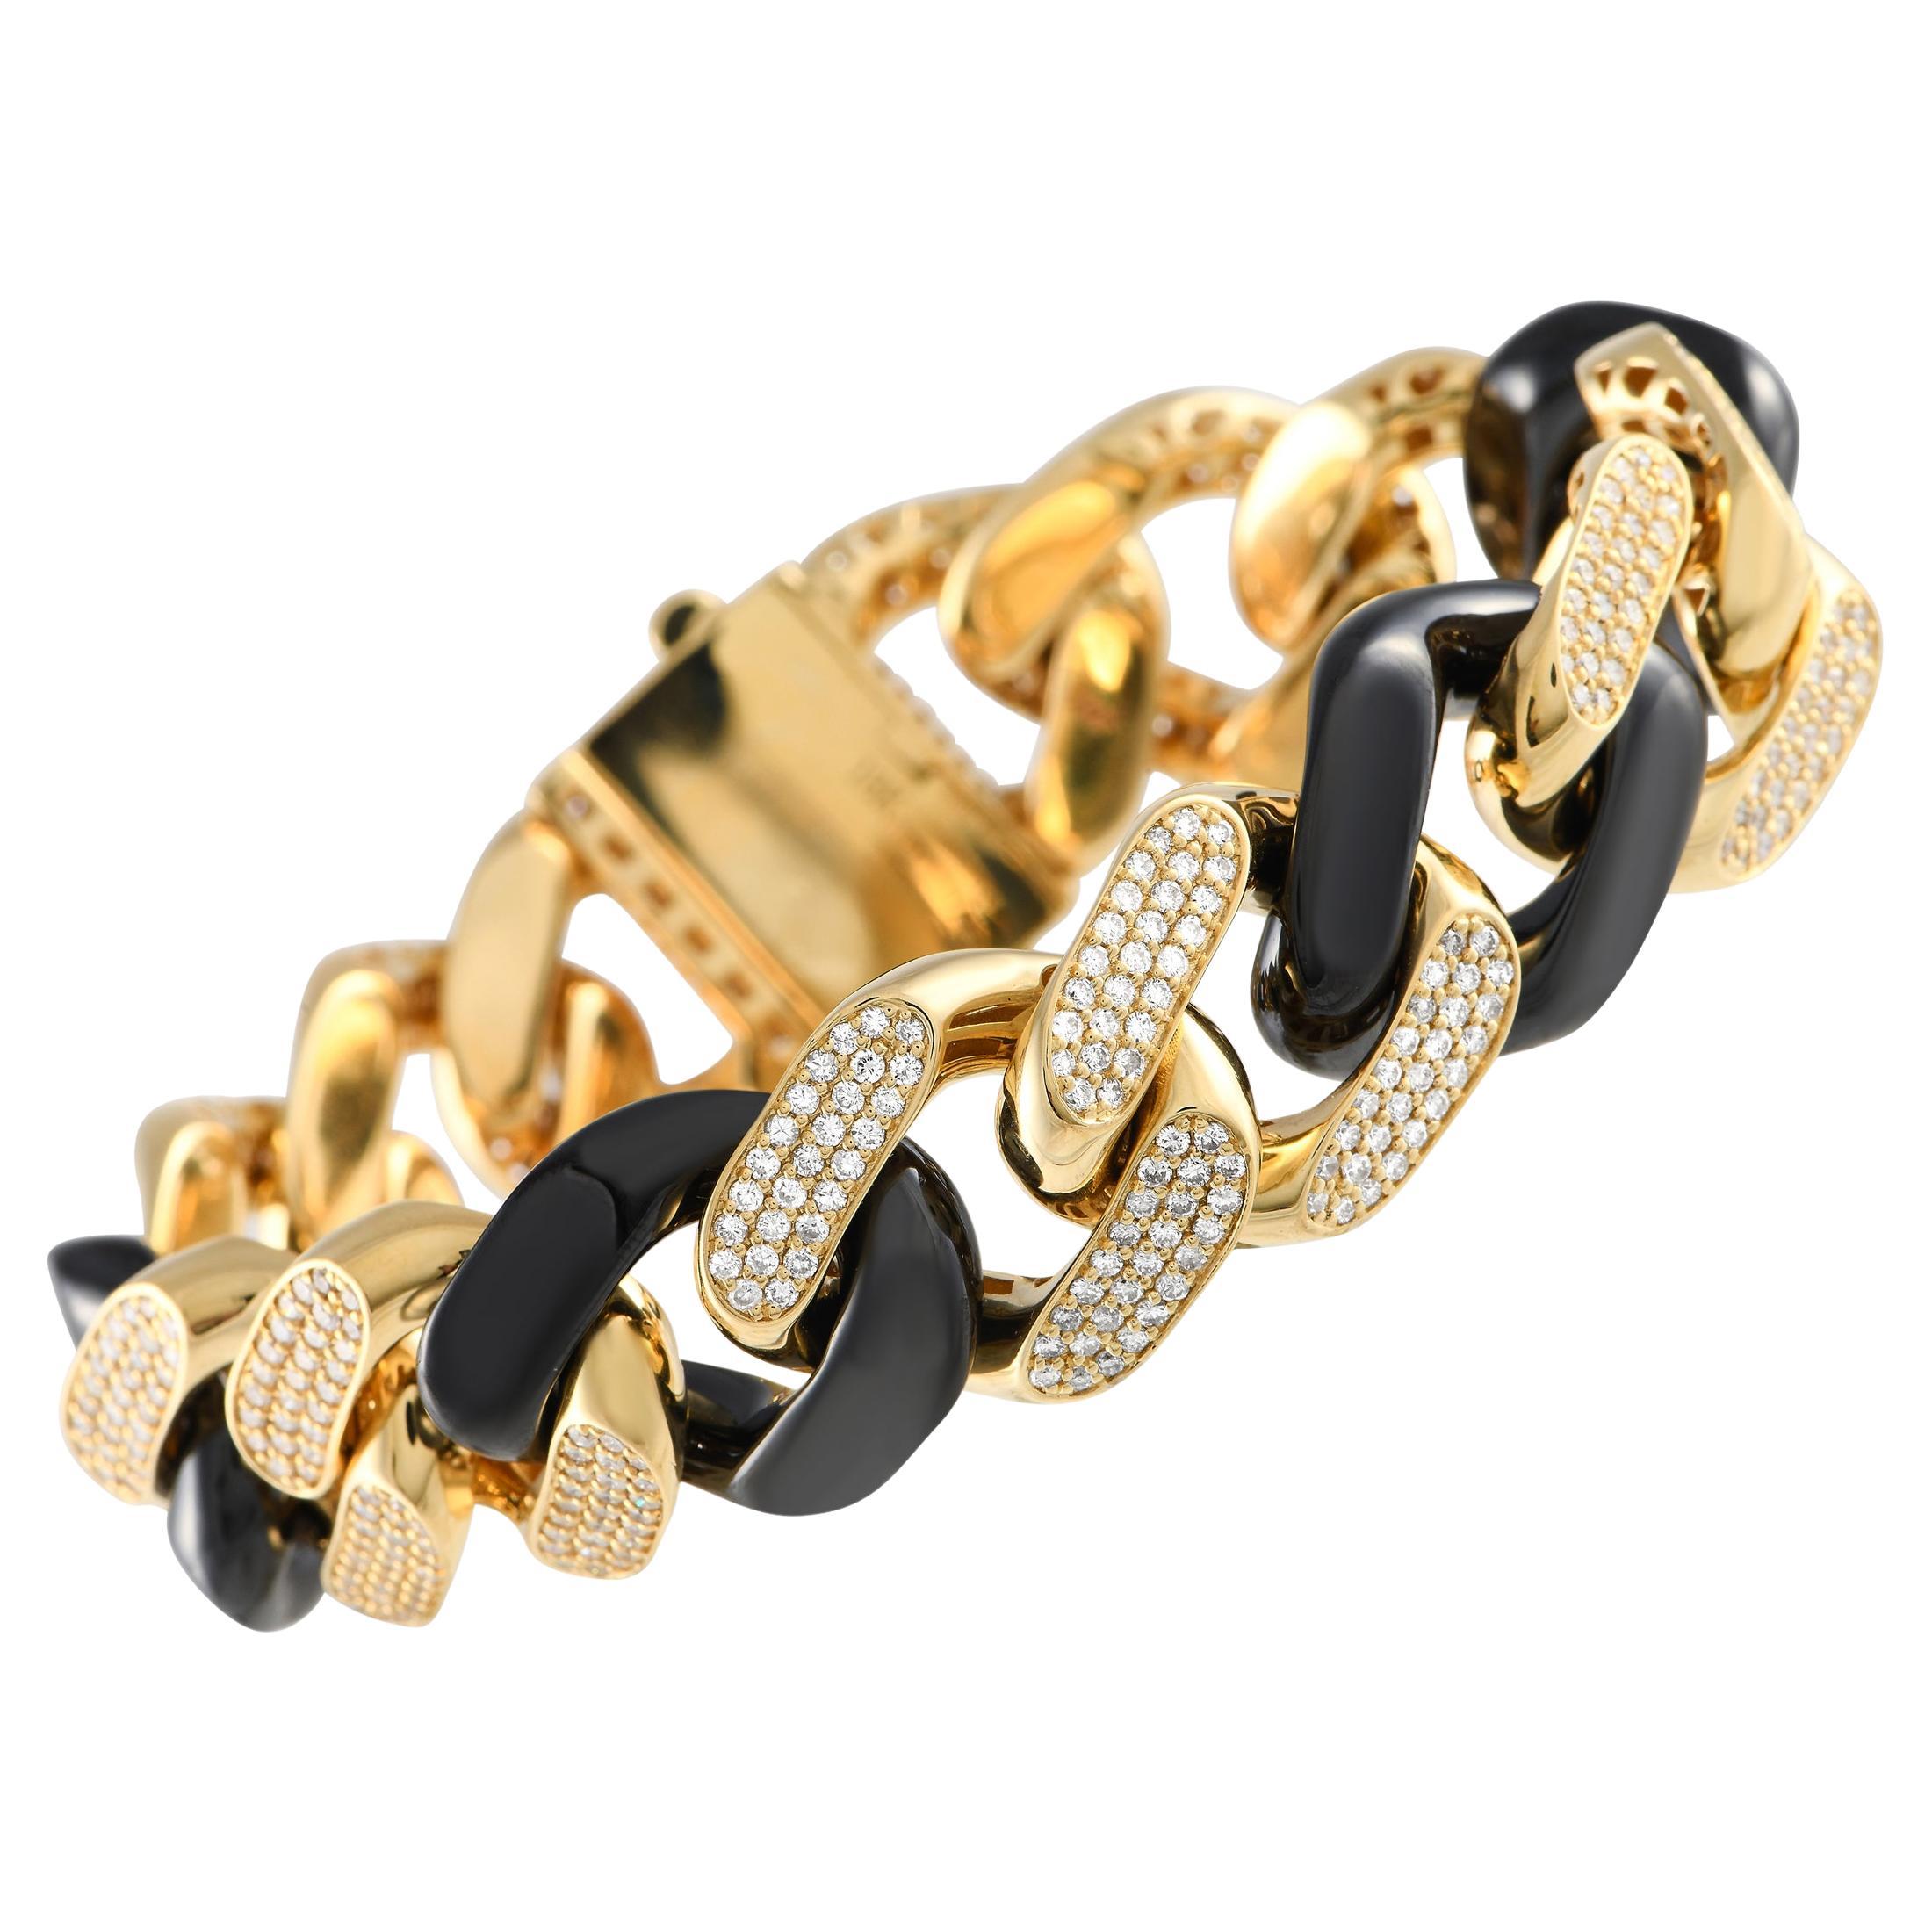 LB Exclusive 18K Yellow Gold 5.0ct Diamond Black Curb Chain Bracelet